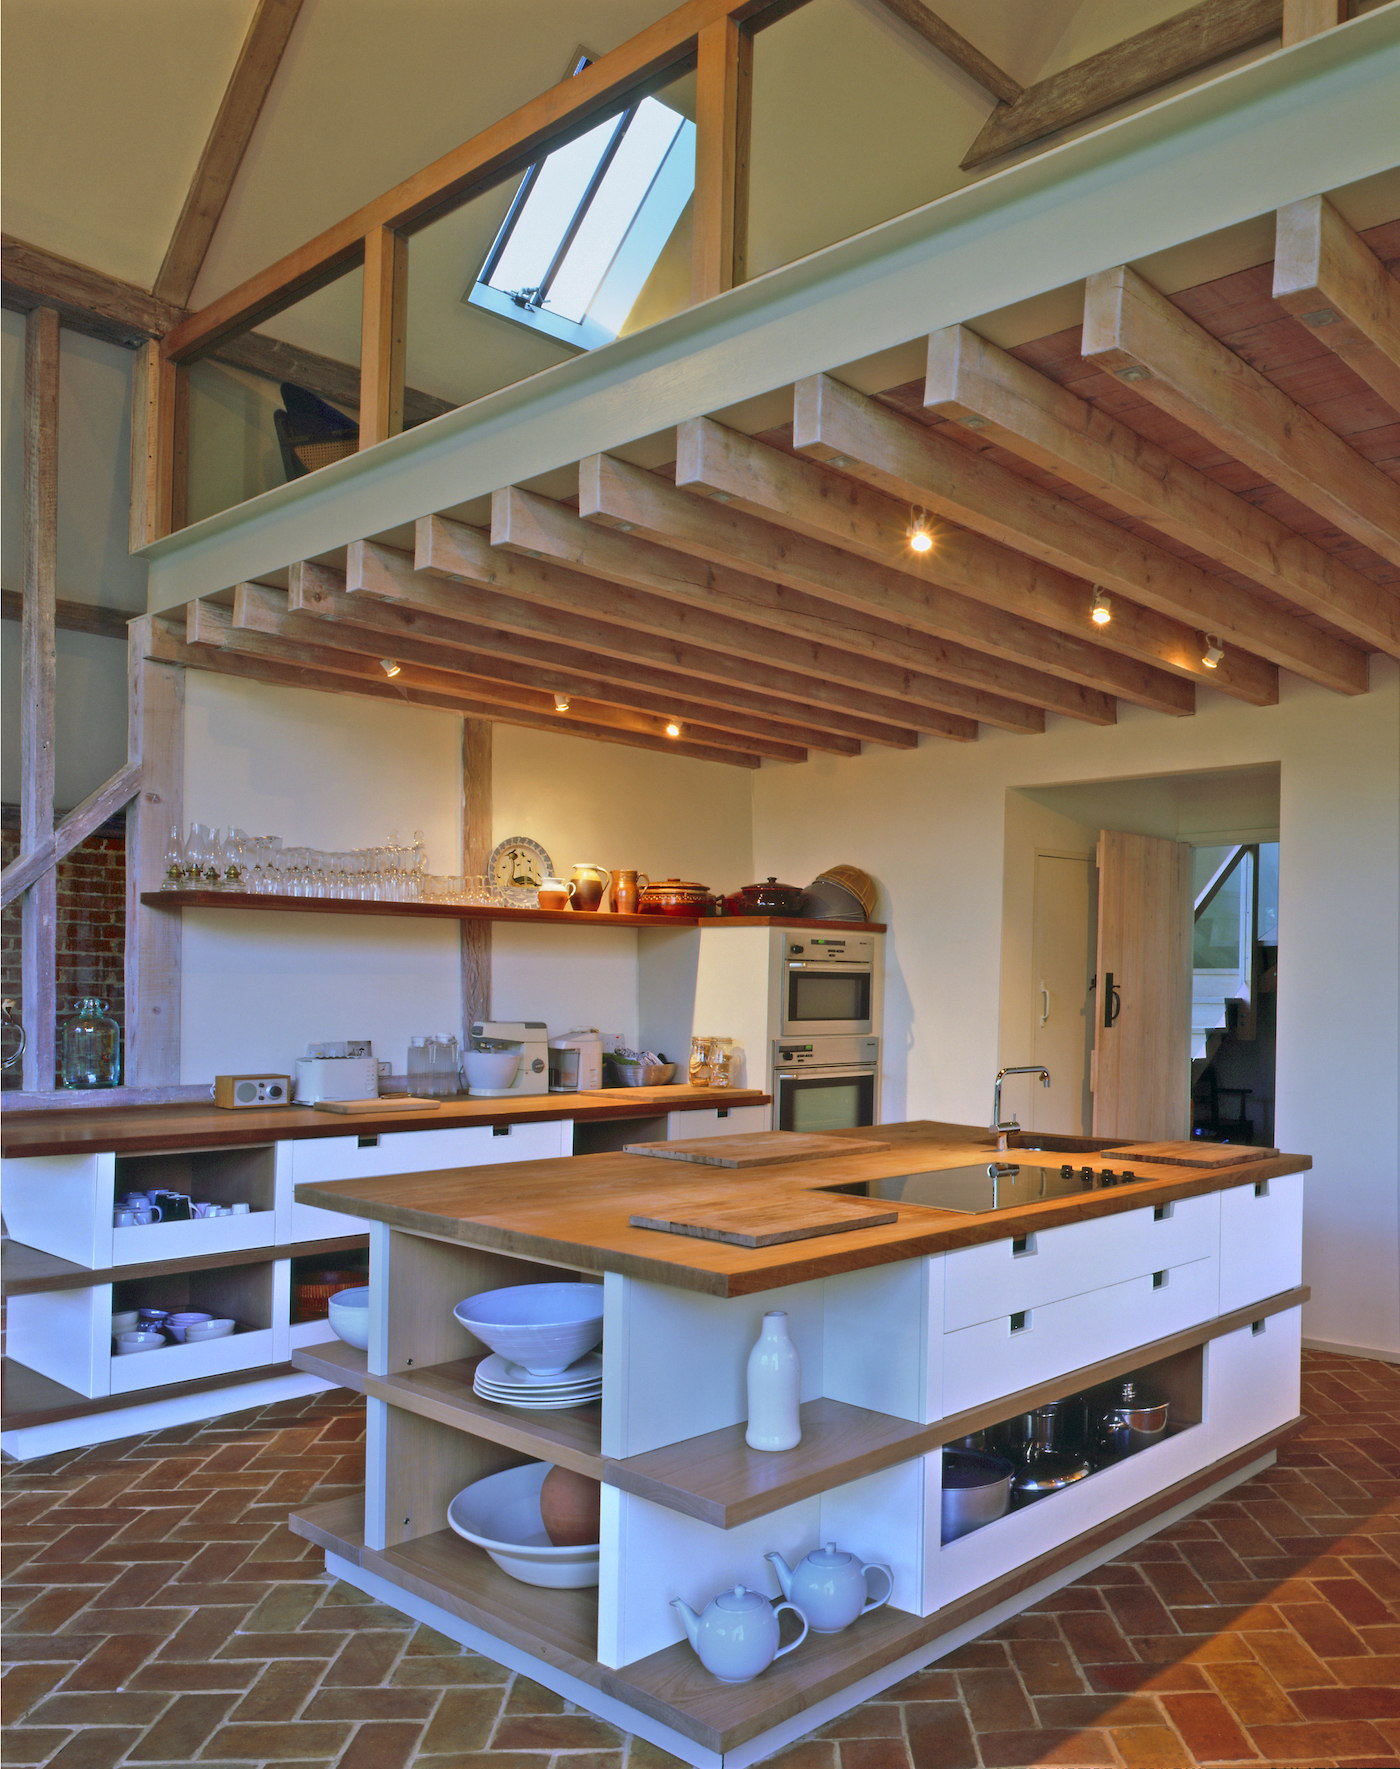 6 Home Design Ideas To Inspire You Nicholas Jacob Architects